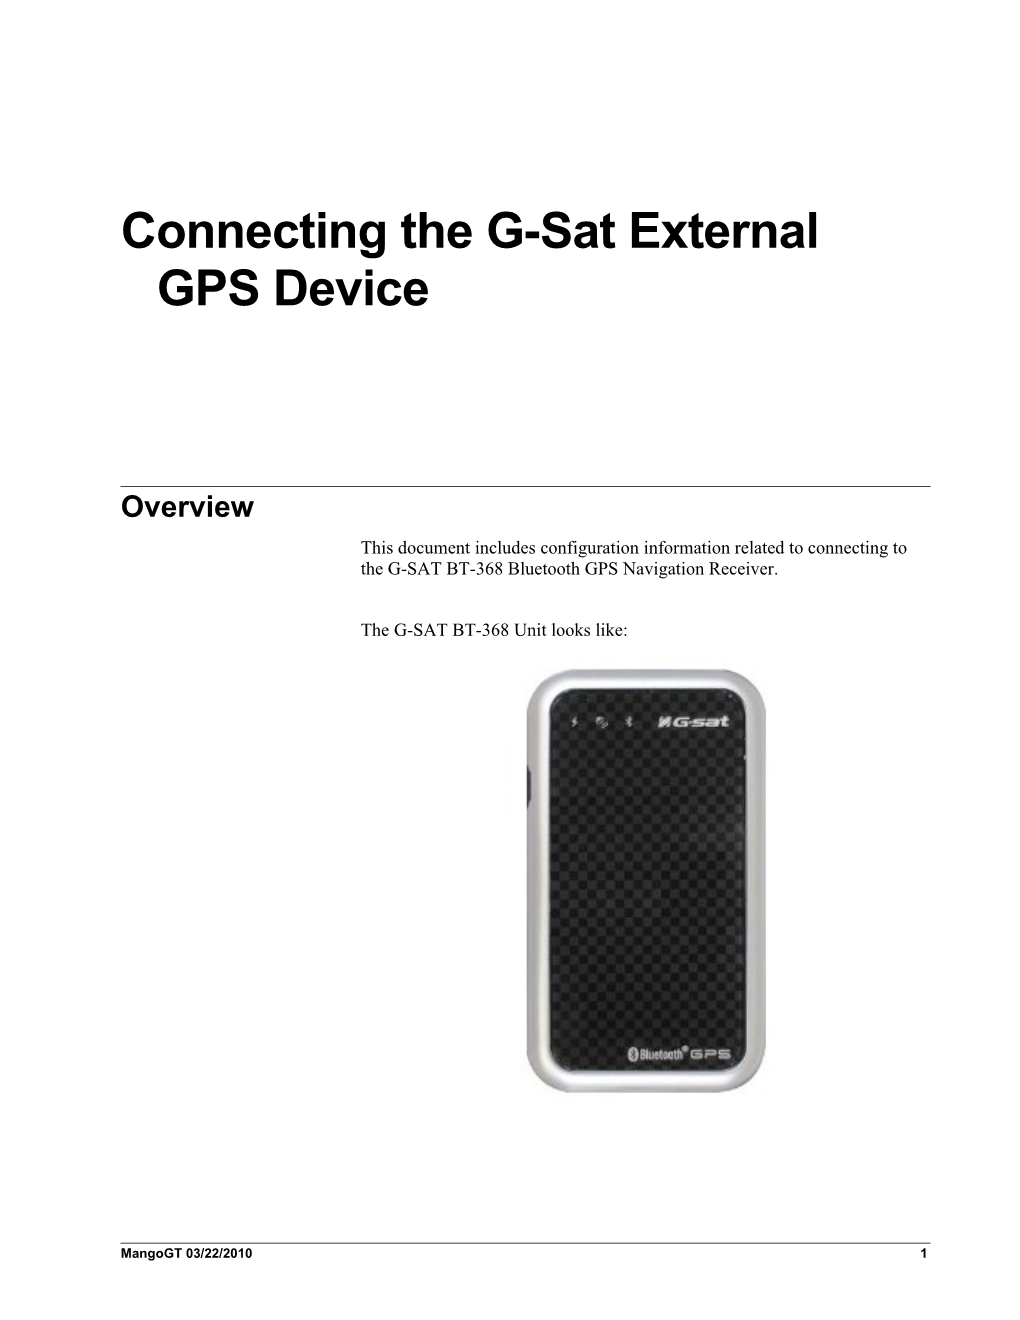 Connecting GSAT Device